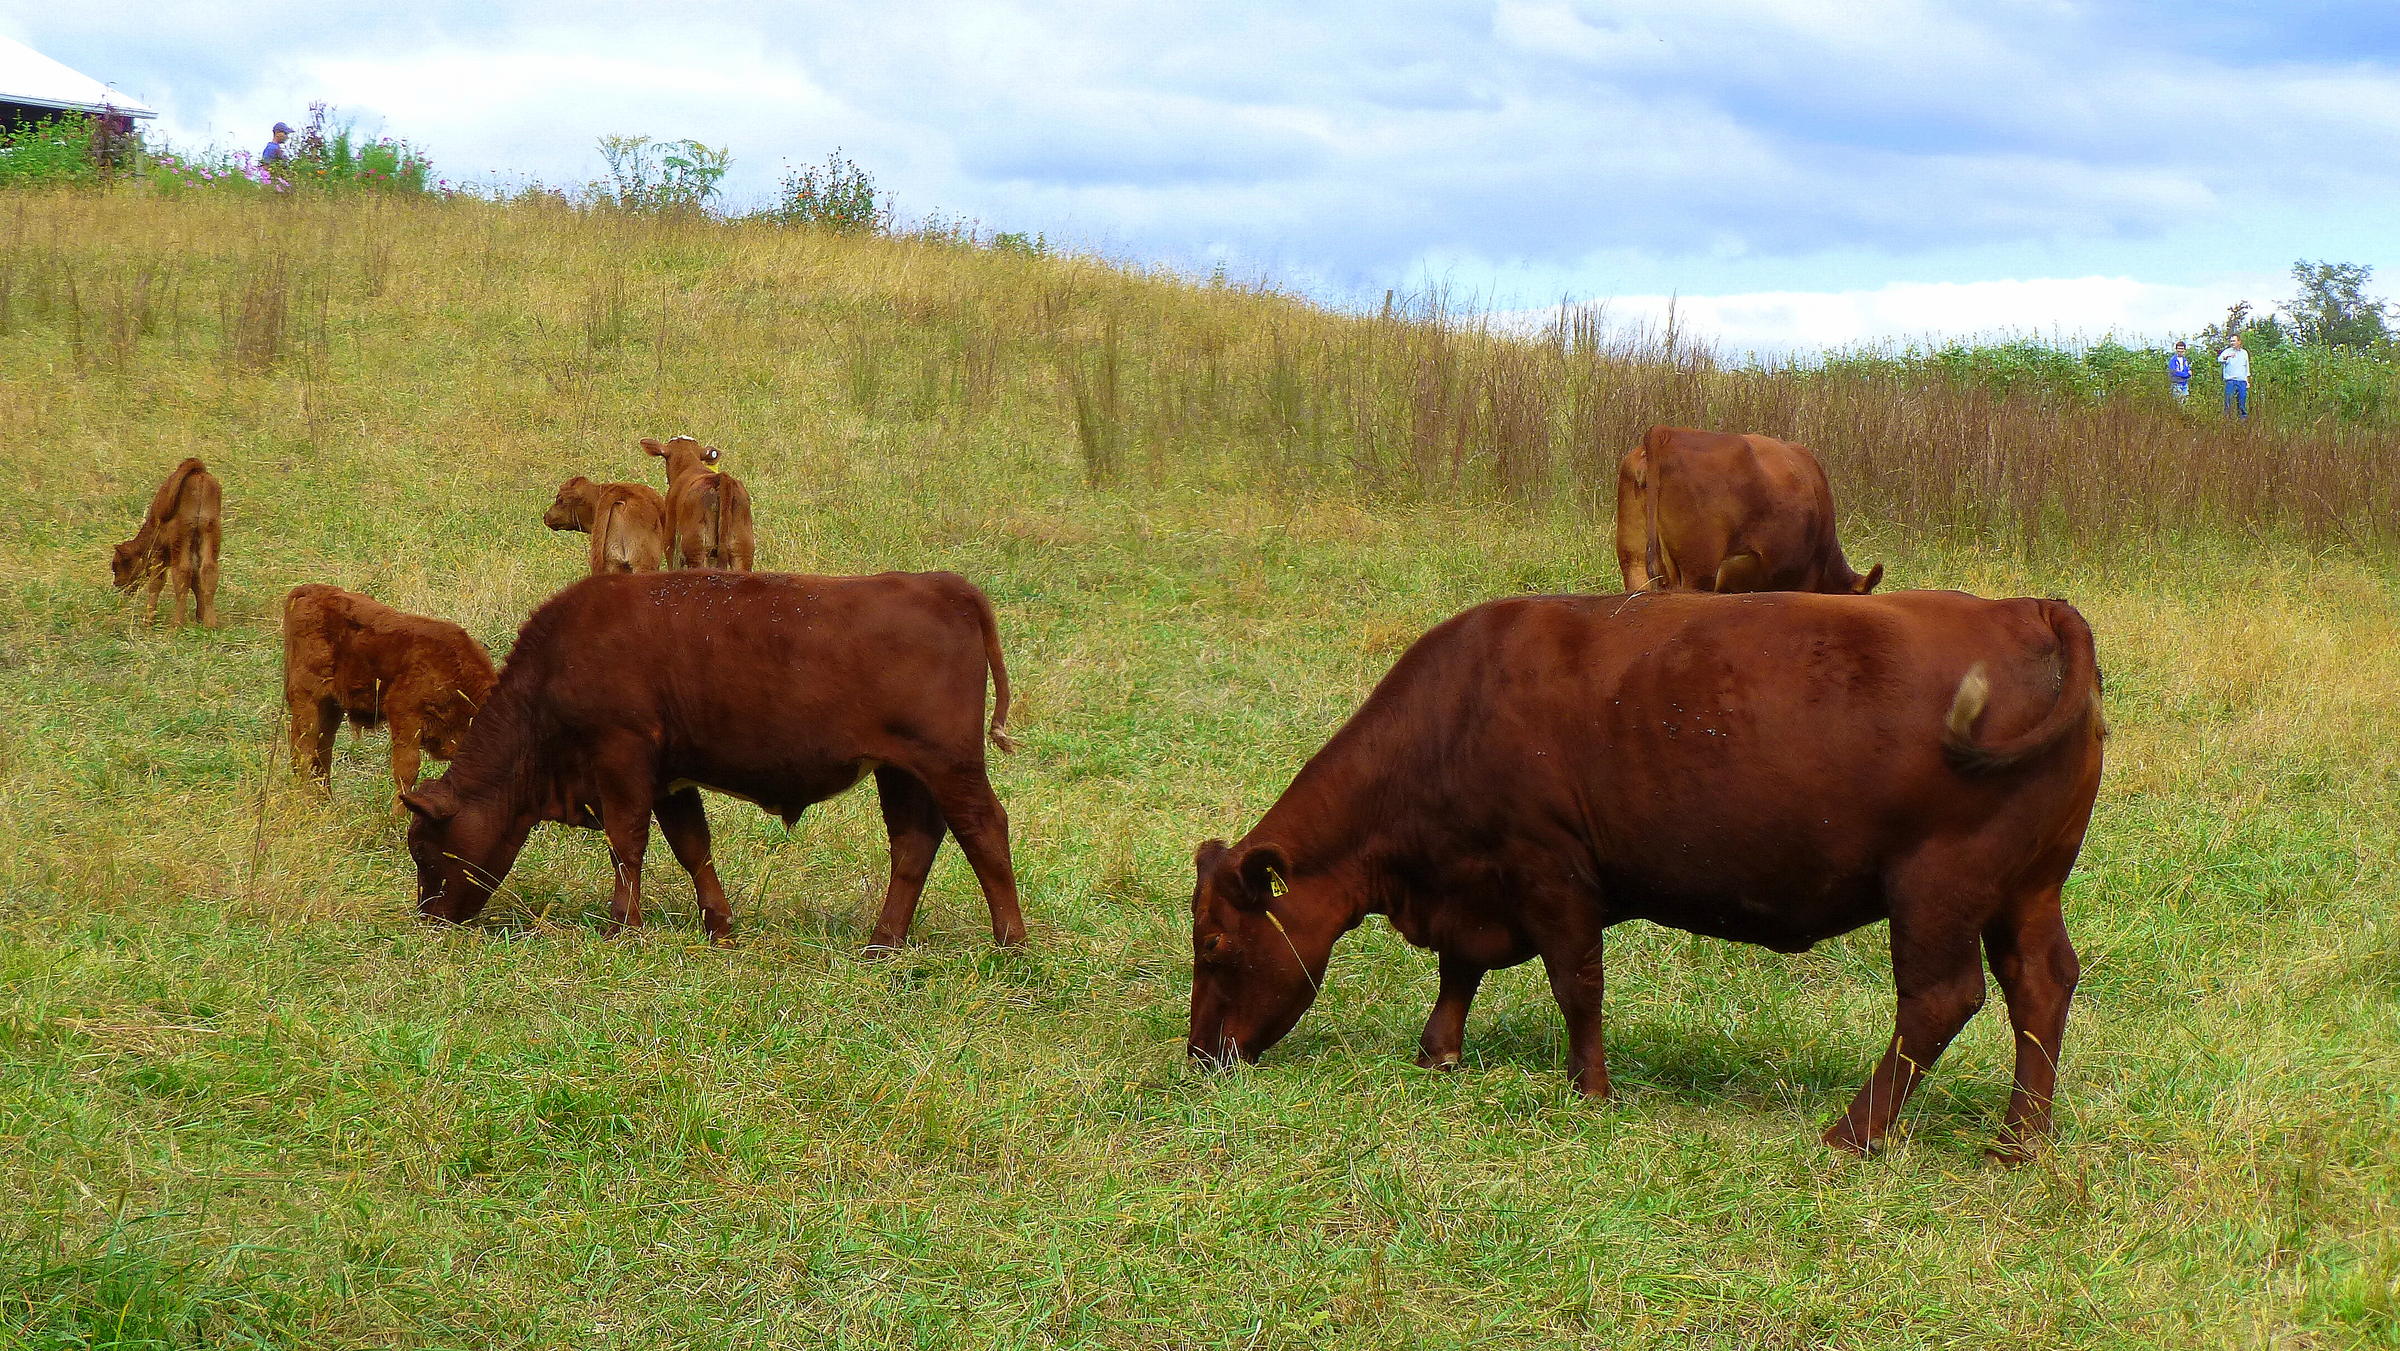 Bovine tuberculosis found in West Michigan cattle herd | Michigan Radio